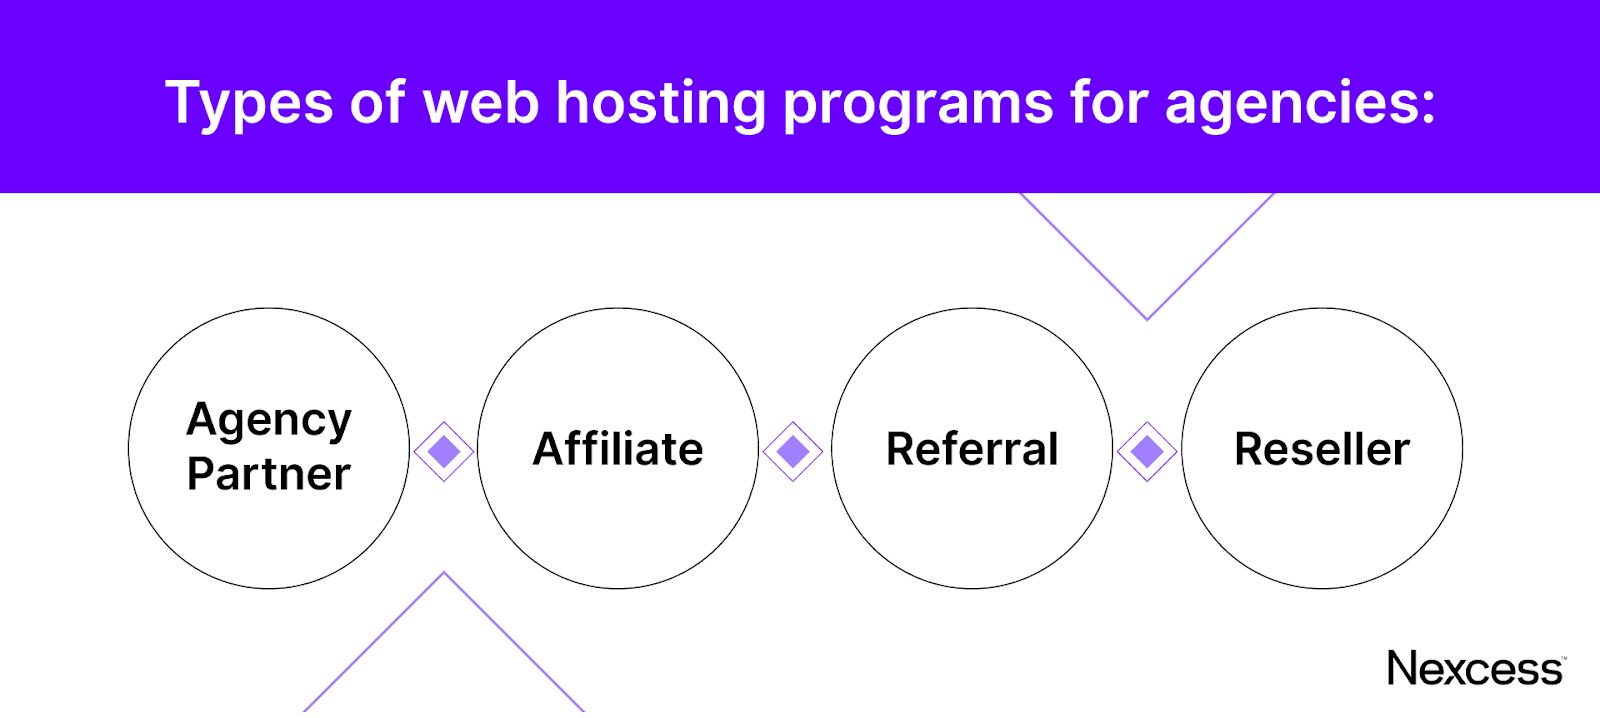 Types of agency web hosting partner programs.